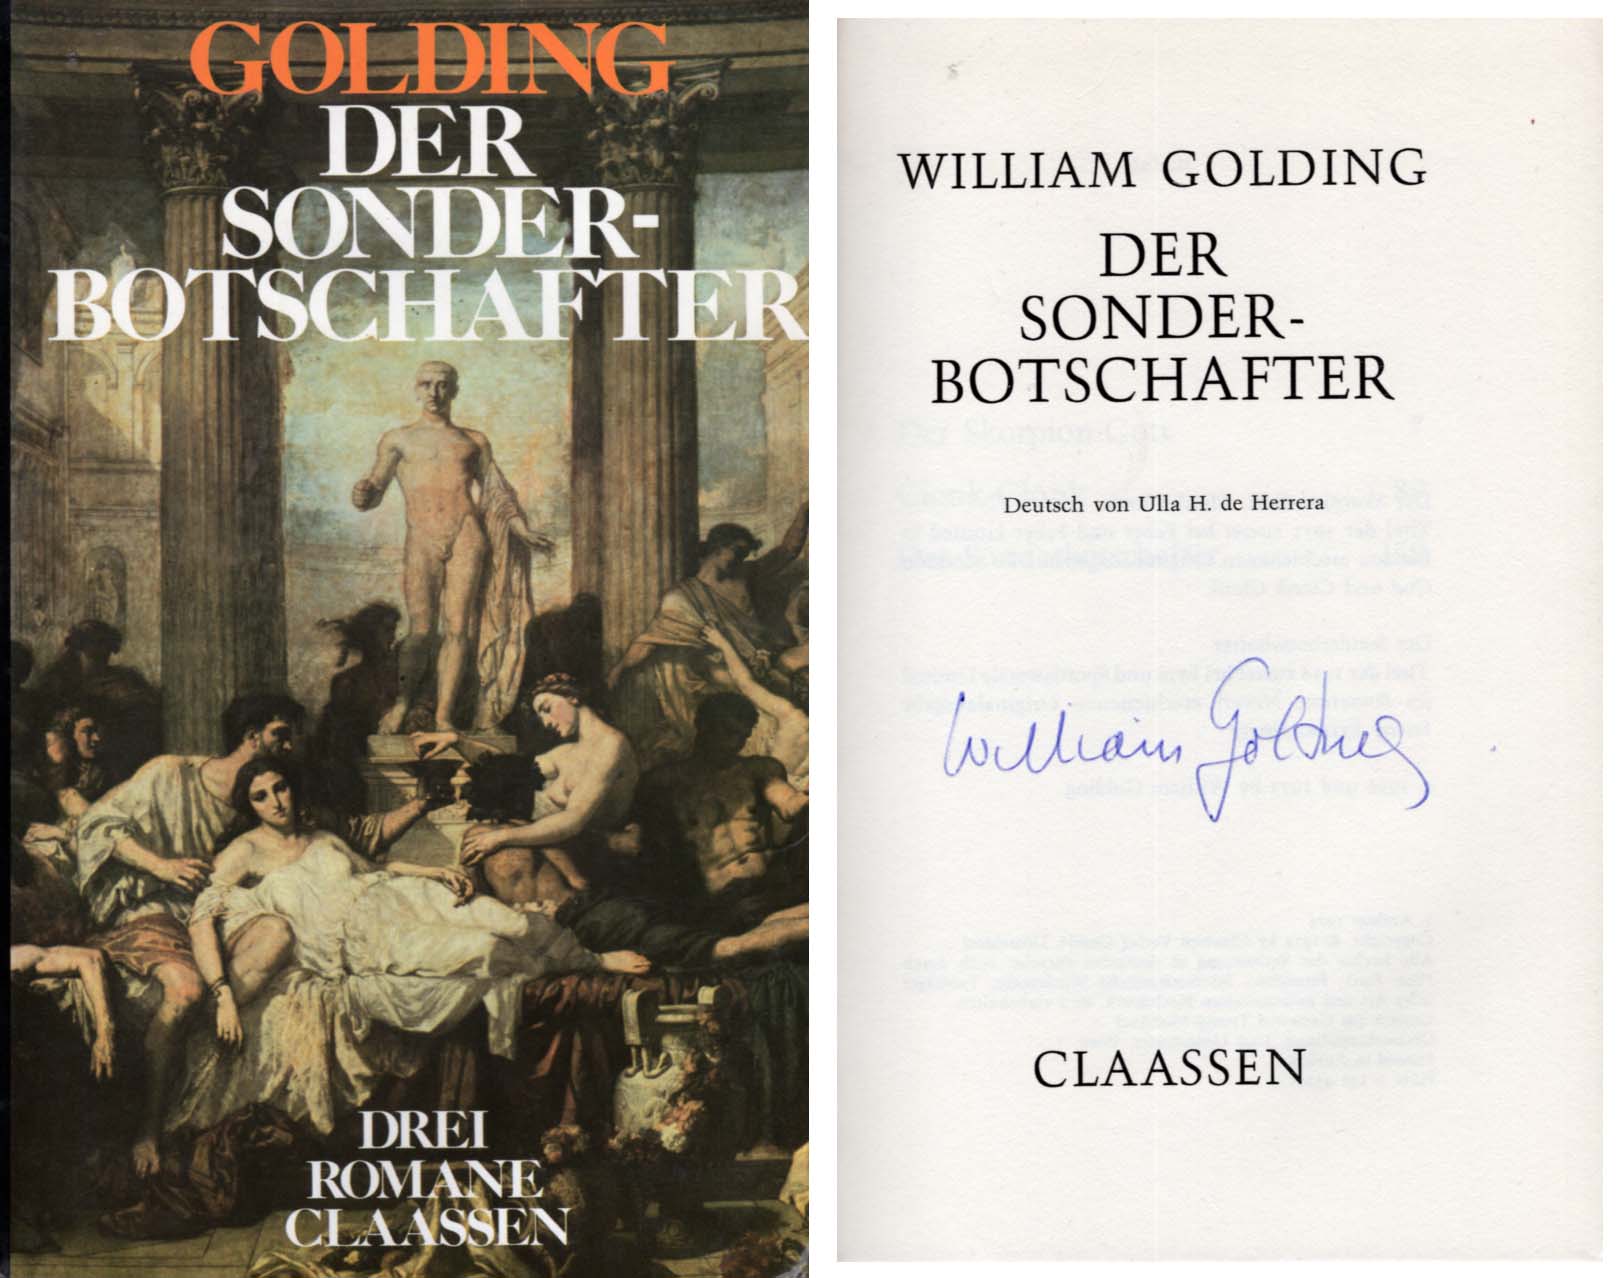 William Golding Autograph Autogramm | ID 7791908126869